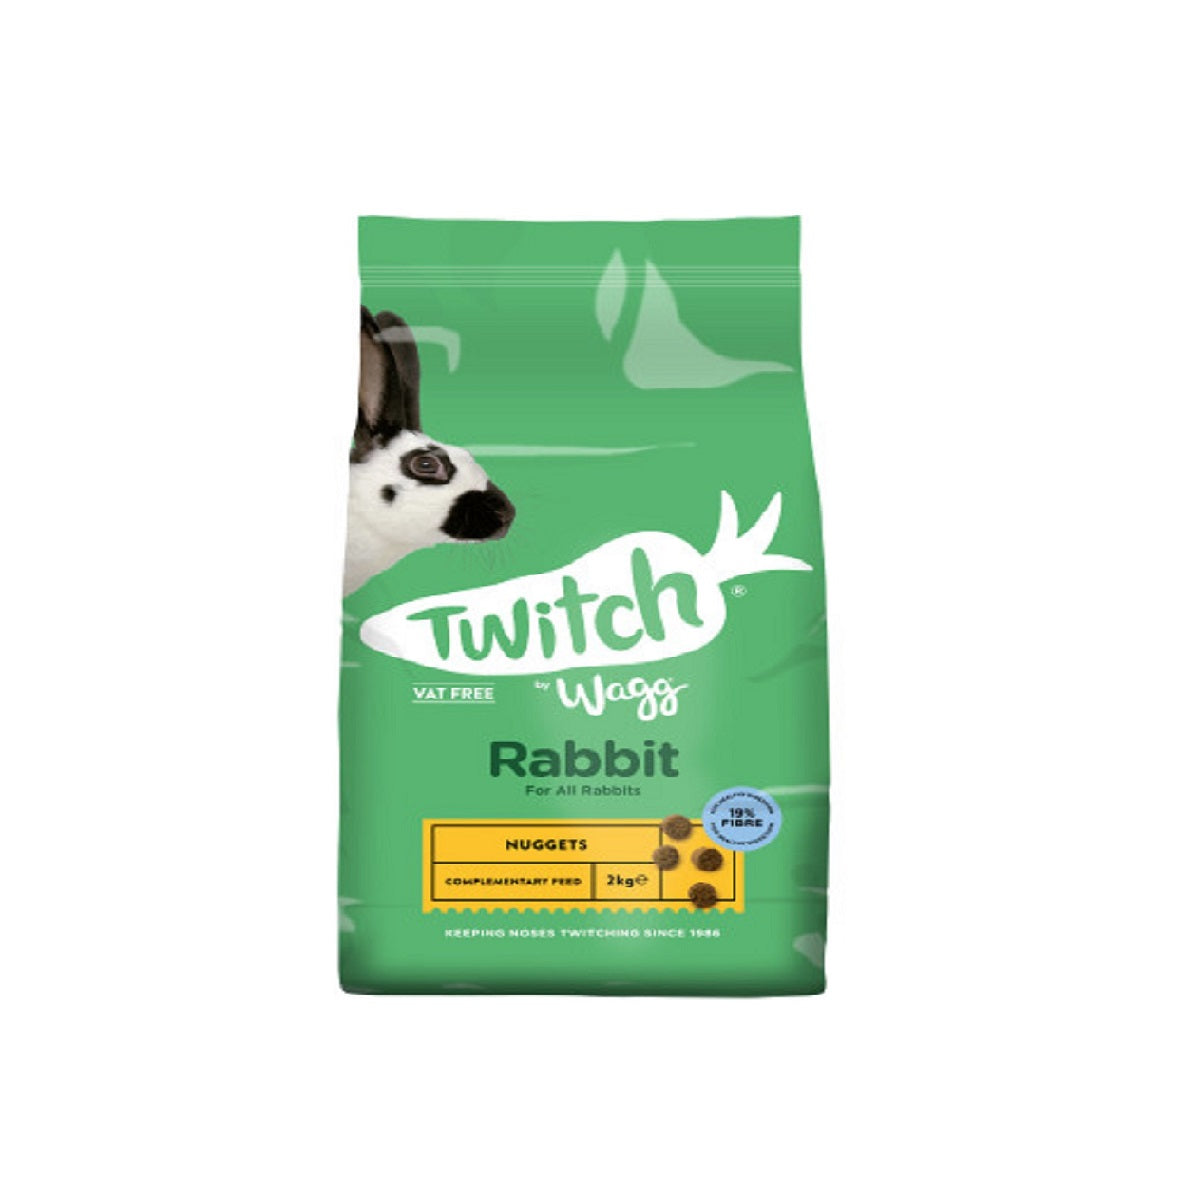 Wagg - Twitch Rabbit